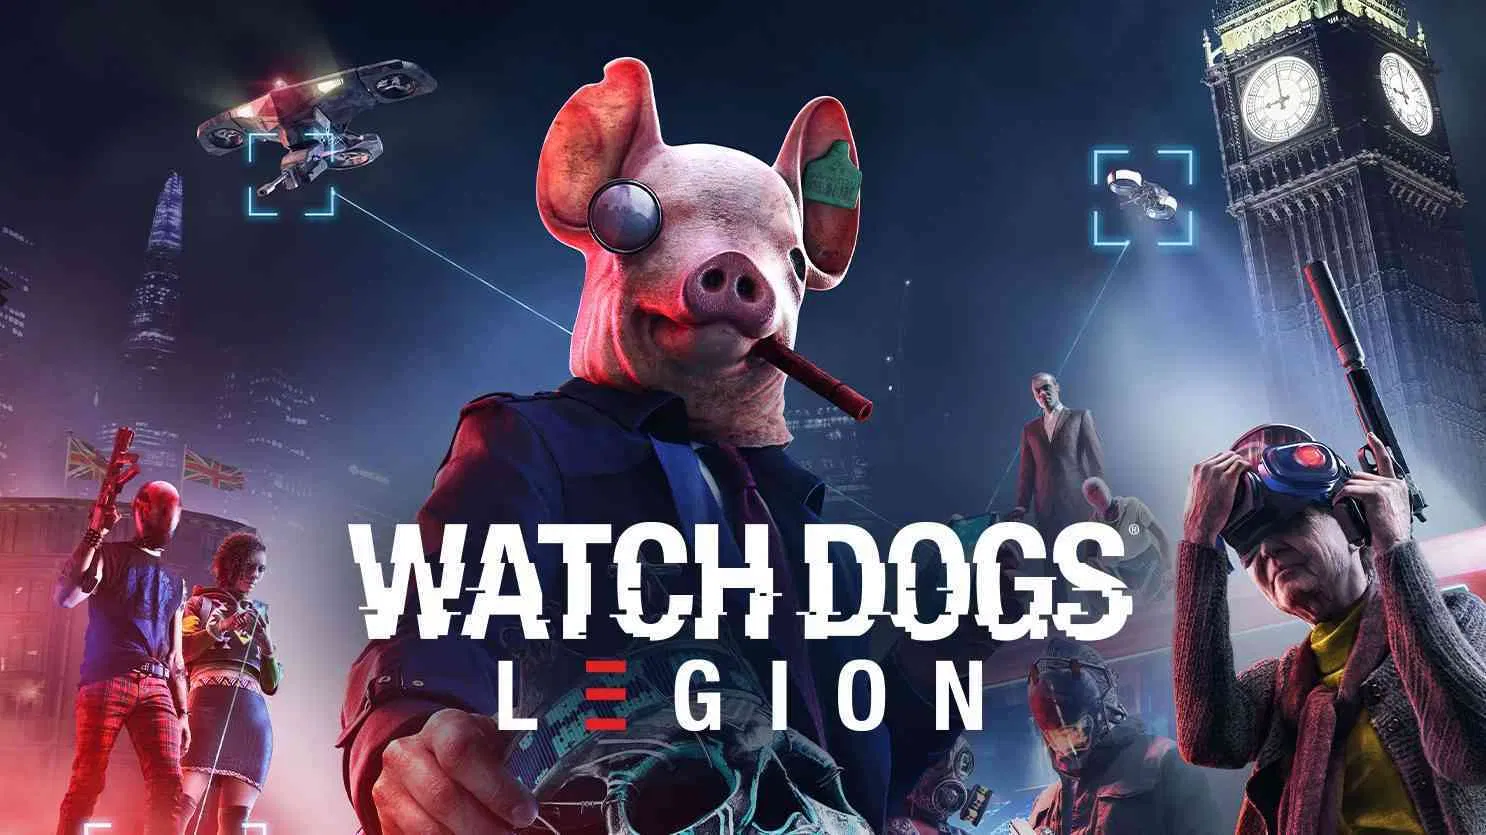 Watch dogs legion: novas imagens vazadas do game | c4617717 cropped watch dogs legion logo 2020 | apple watch | watch dogs legion apple watch